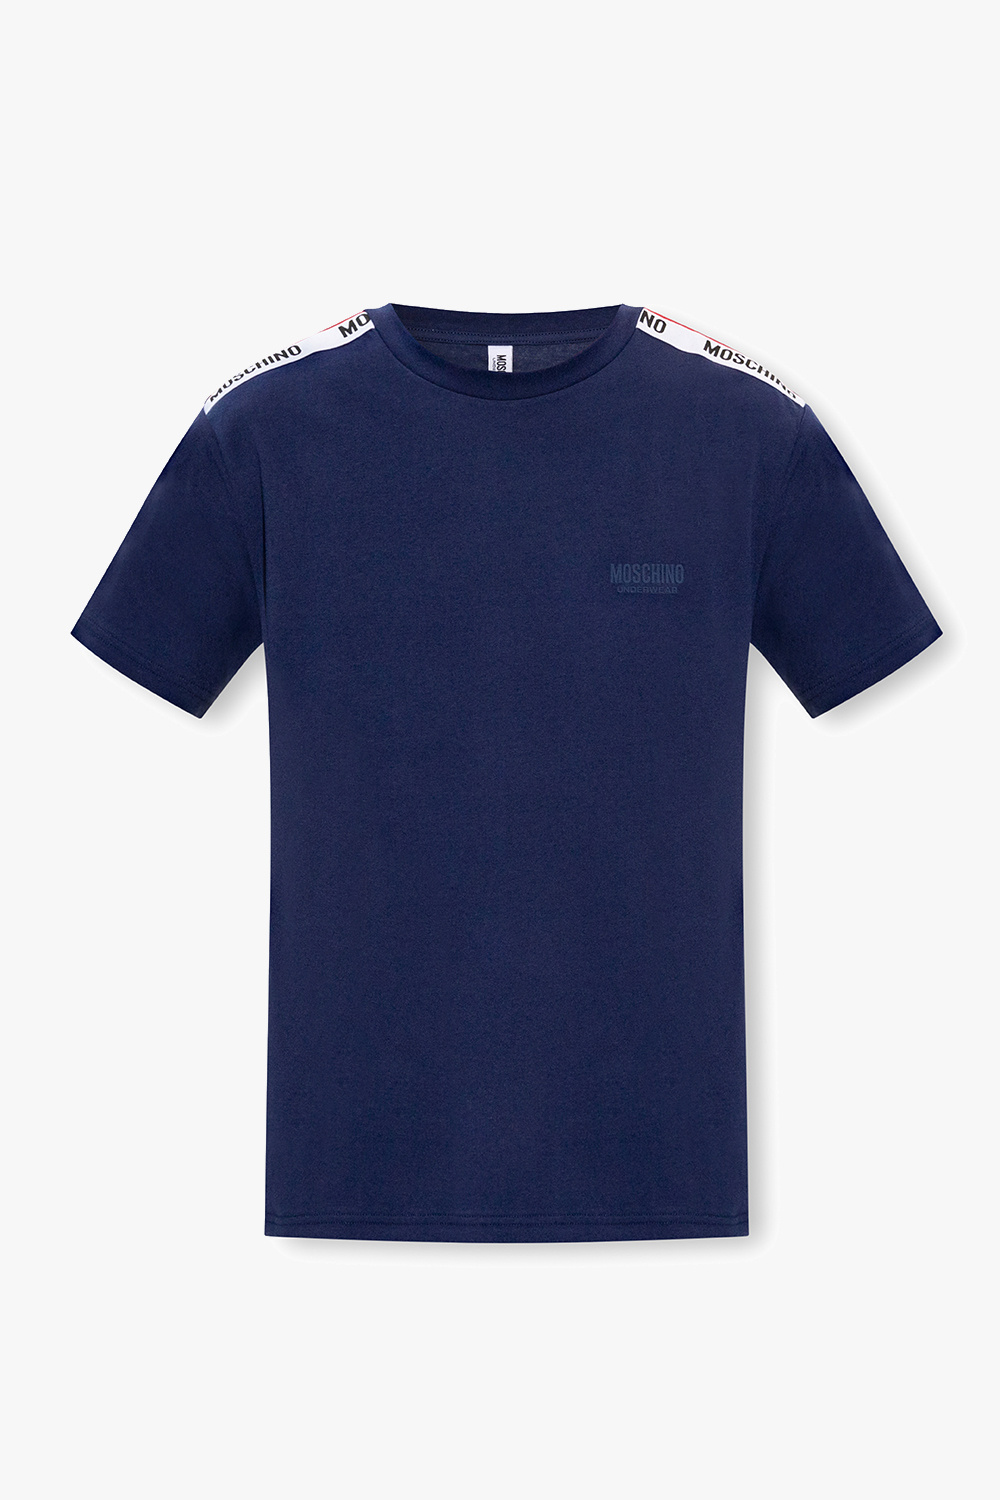 Navy blue T-shirt with logo Moschino - Vitkac Canada